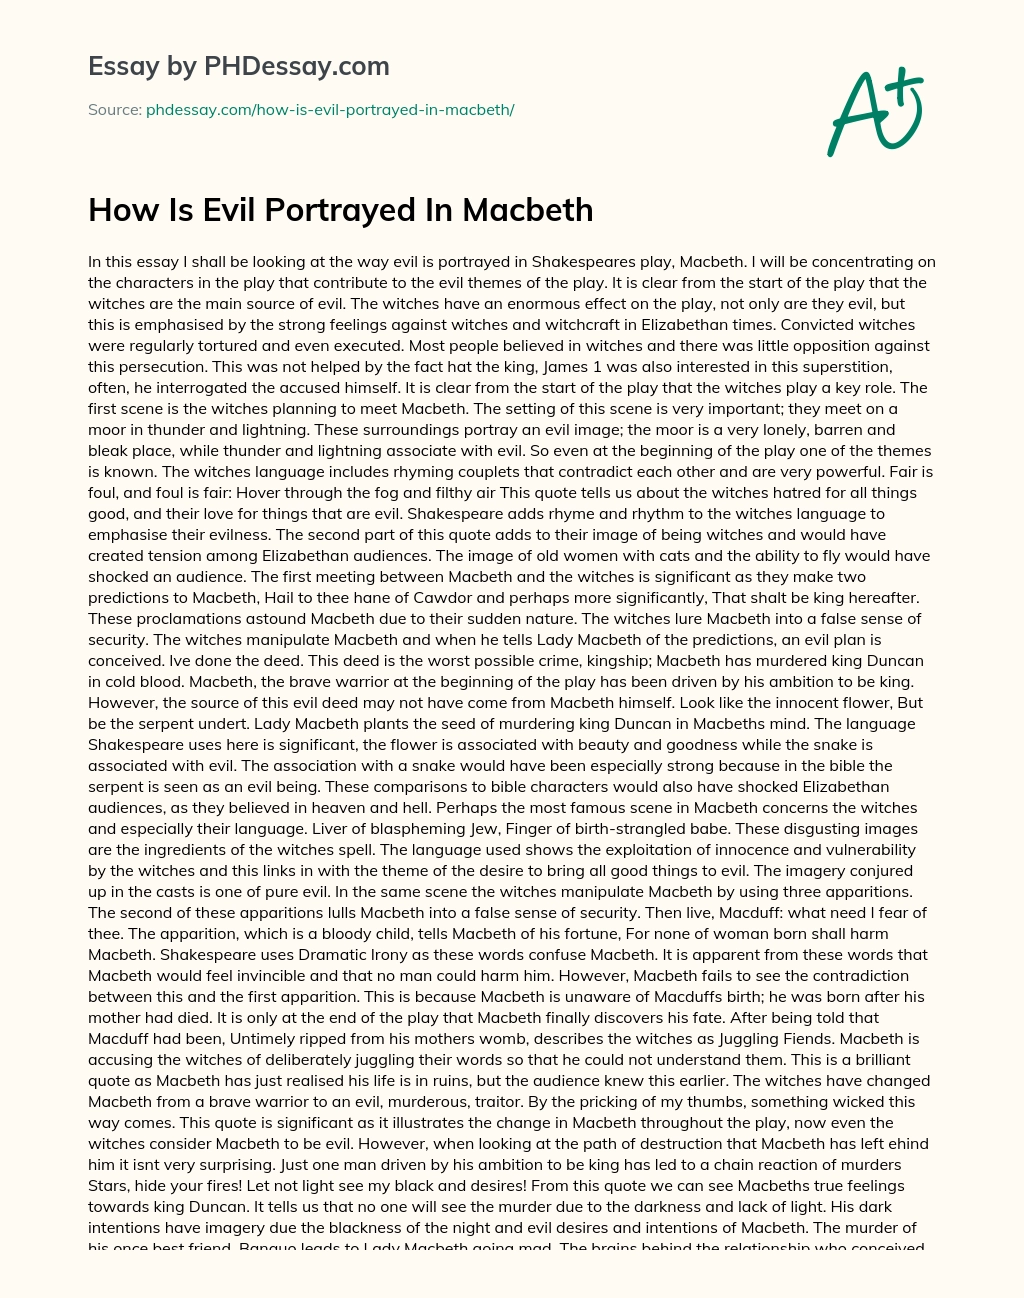 macbeth is more evil essay